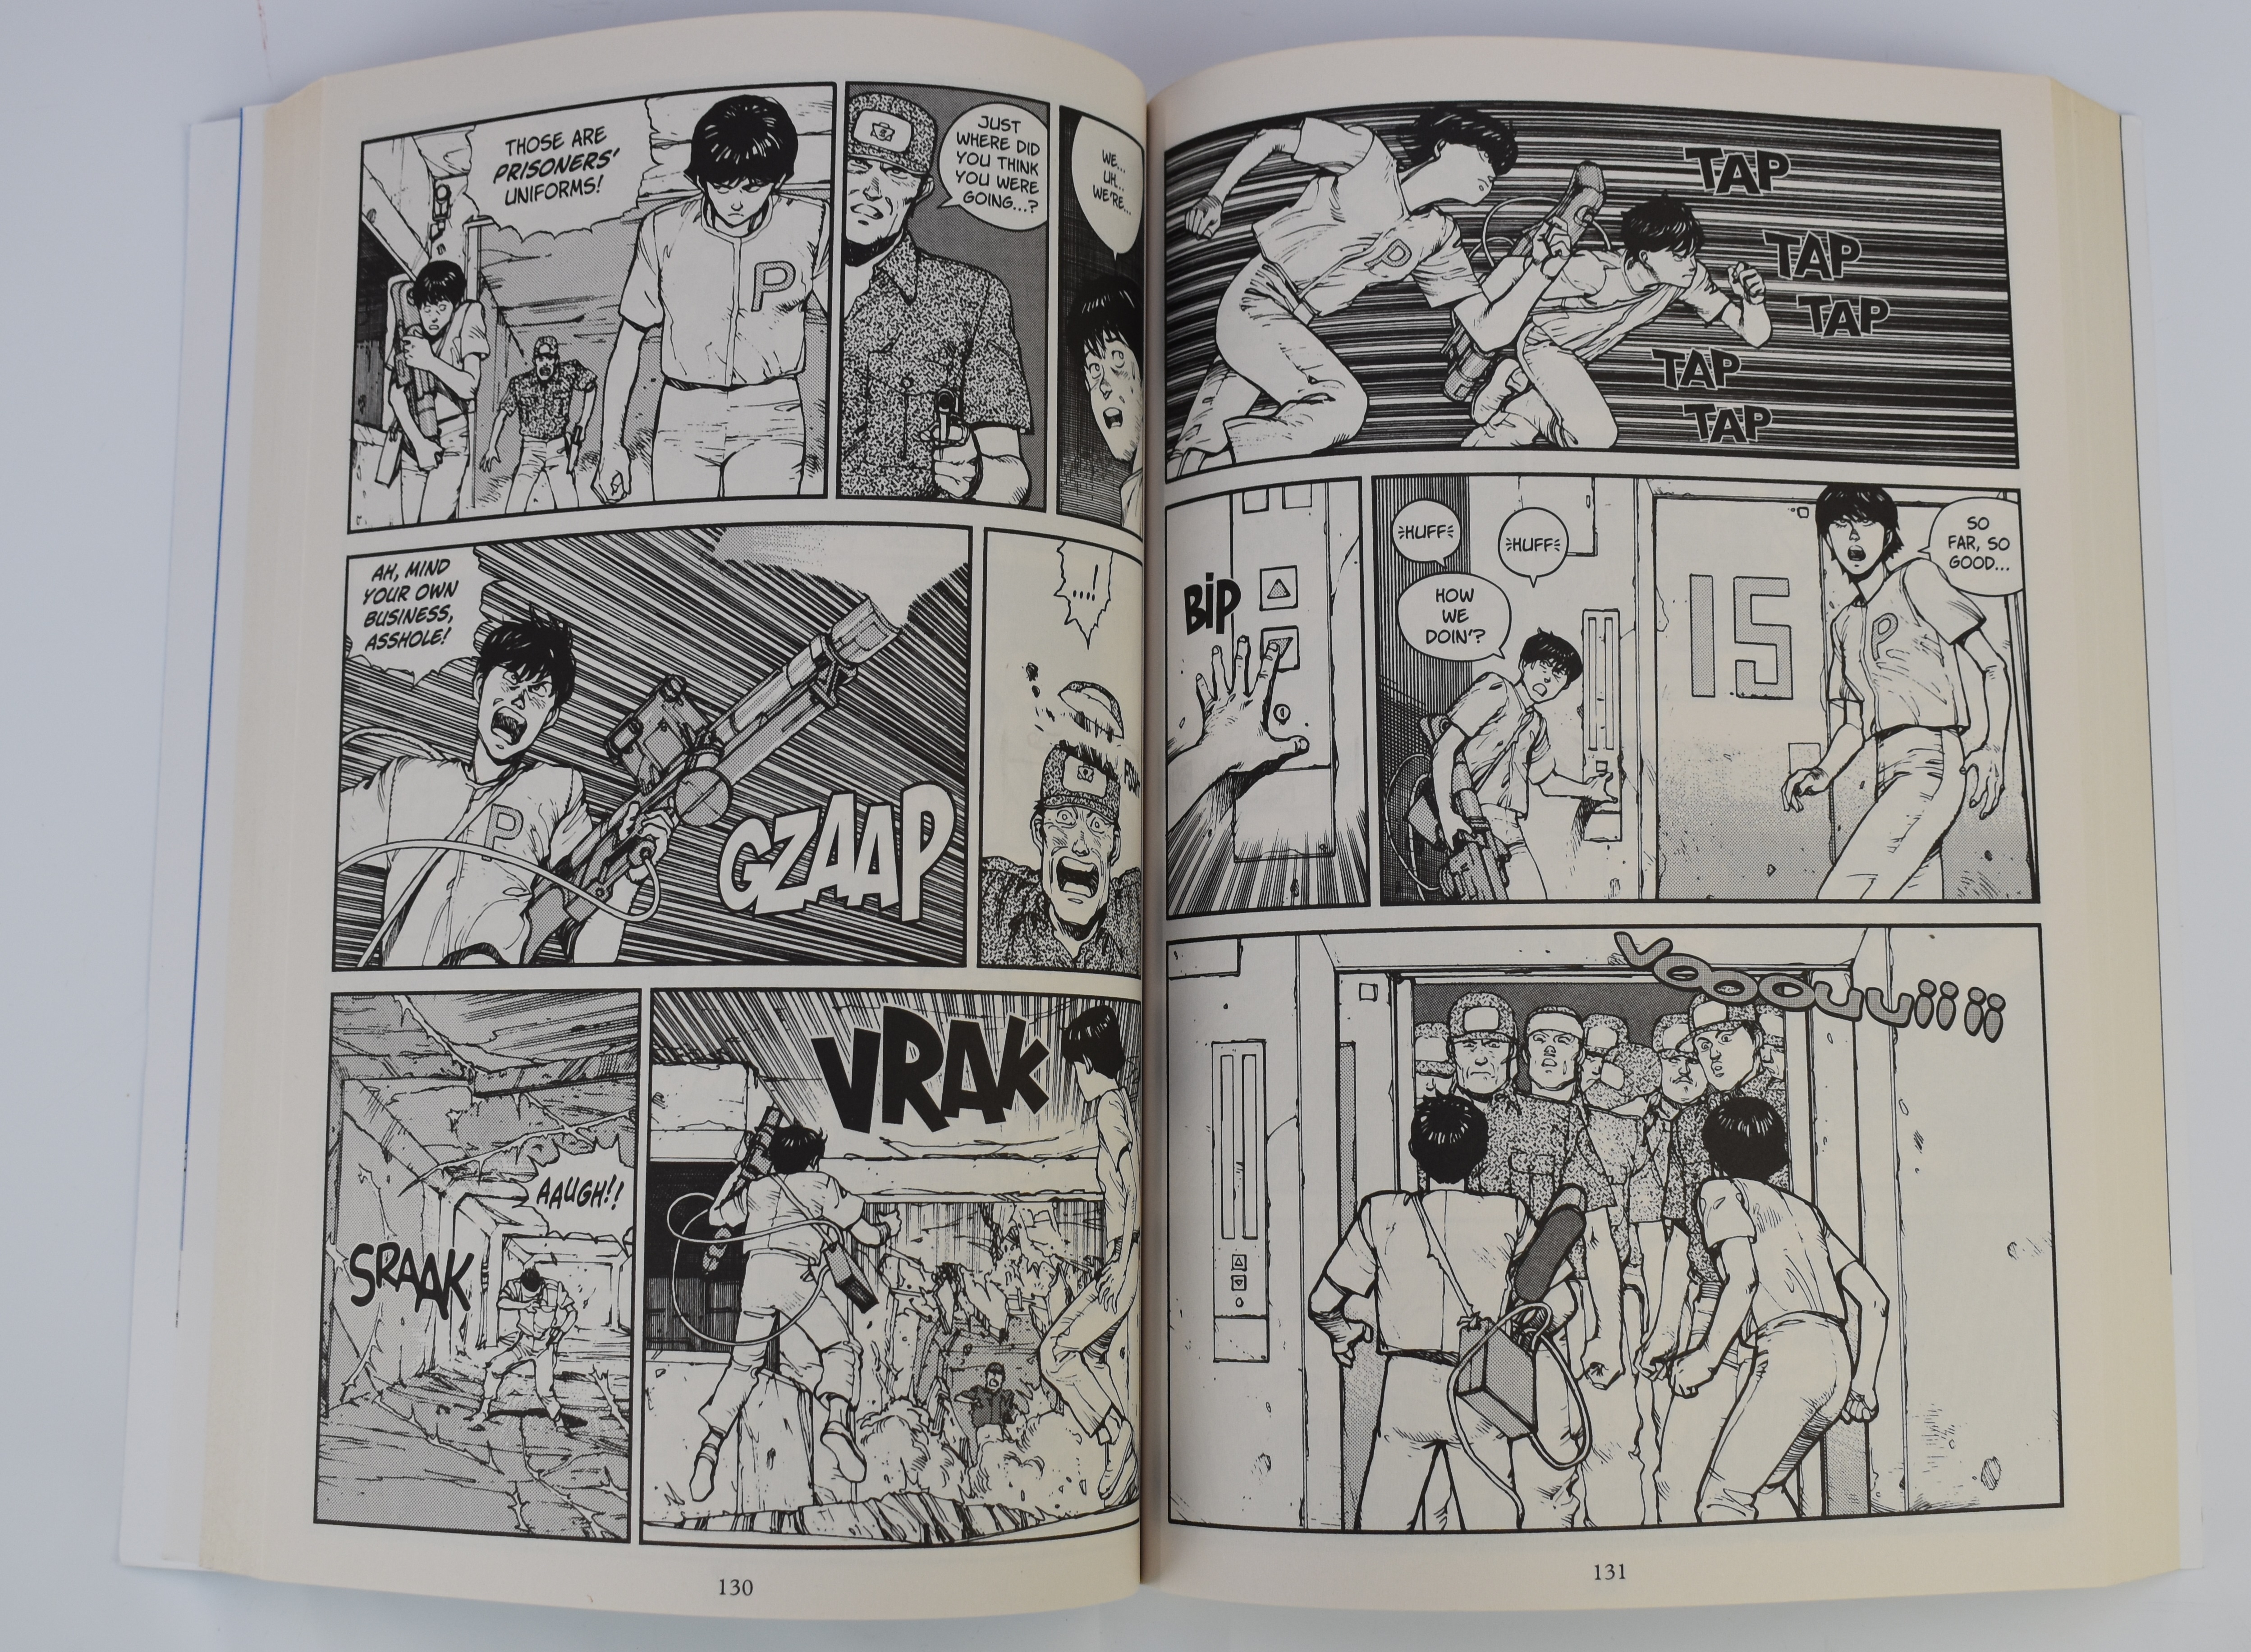 Akira volumes 1-6 by Katsuhiro Otomo published by Dark Horse Comics. - Image 2 of 3